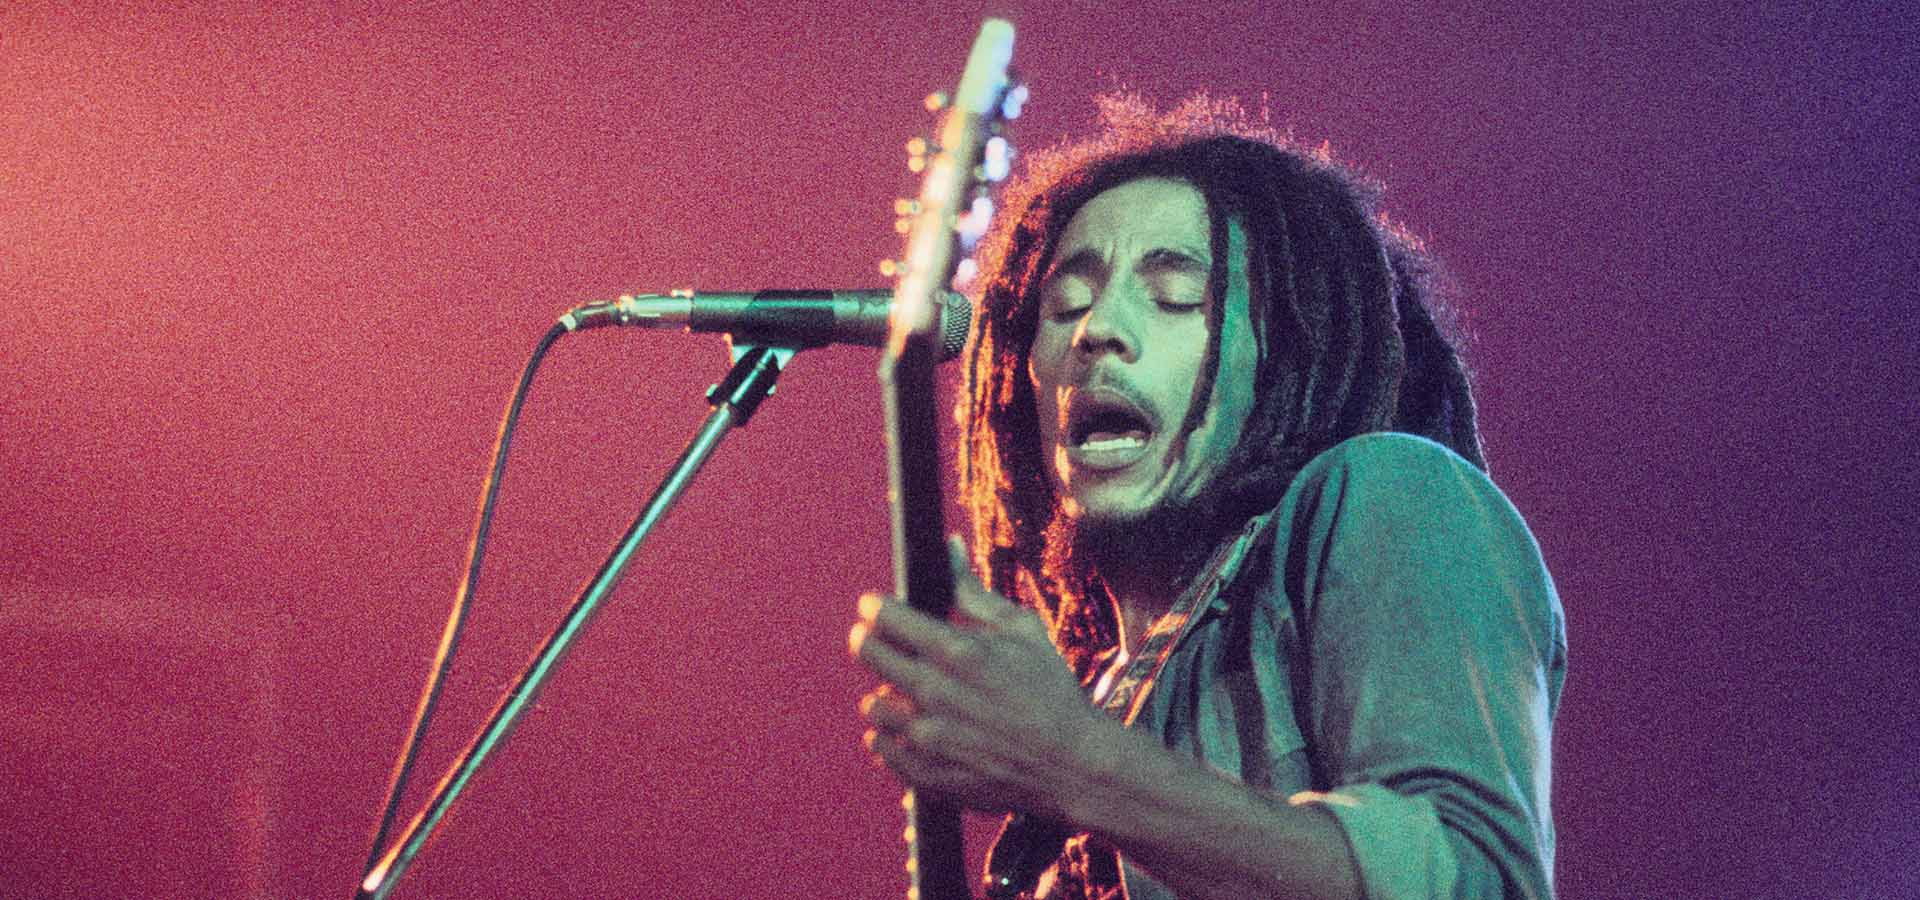 Bob Marley, The Hague (Voorburg), Netherlands 1976 den haag, Netherlands - 1976, (Photo Gijsbert Hanekroot) *** Local Caption *** Bob Marley and the Wailers 